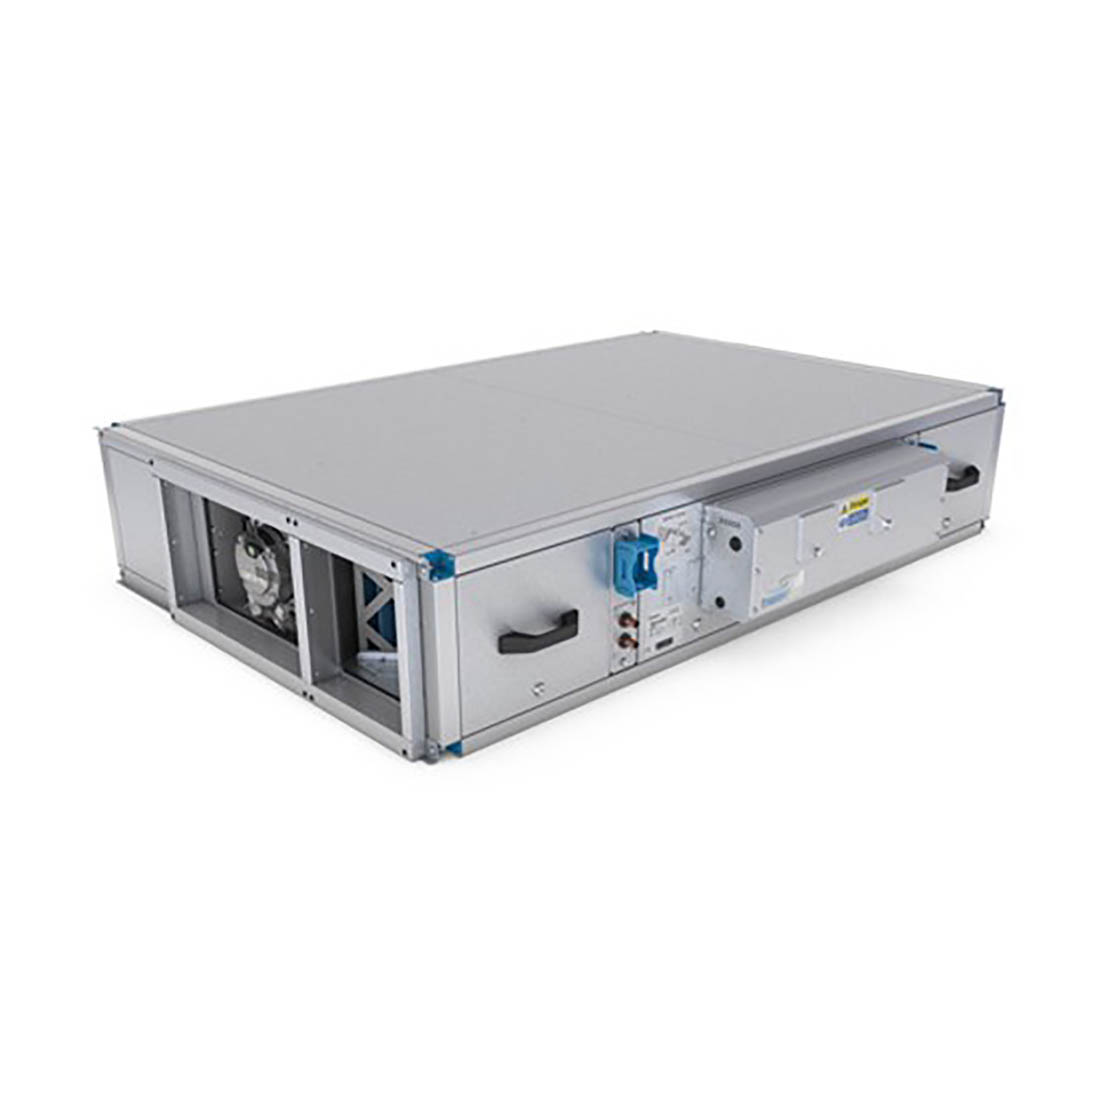 Nuaire Xboxer XBC-65 Commercial Heat Exchange Unit - (Price Varies Upon Appraisal)